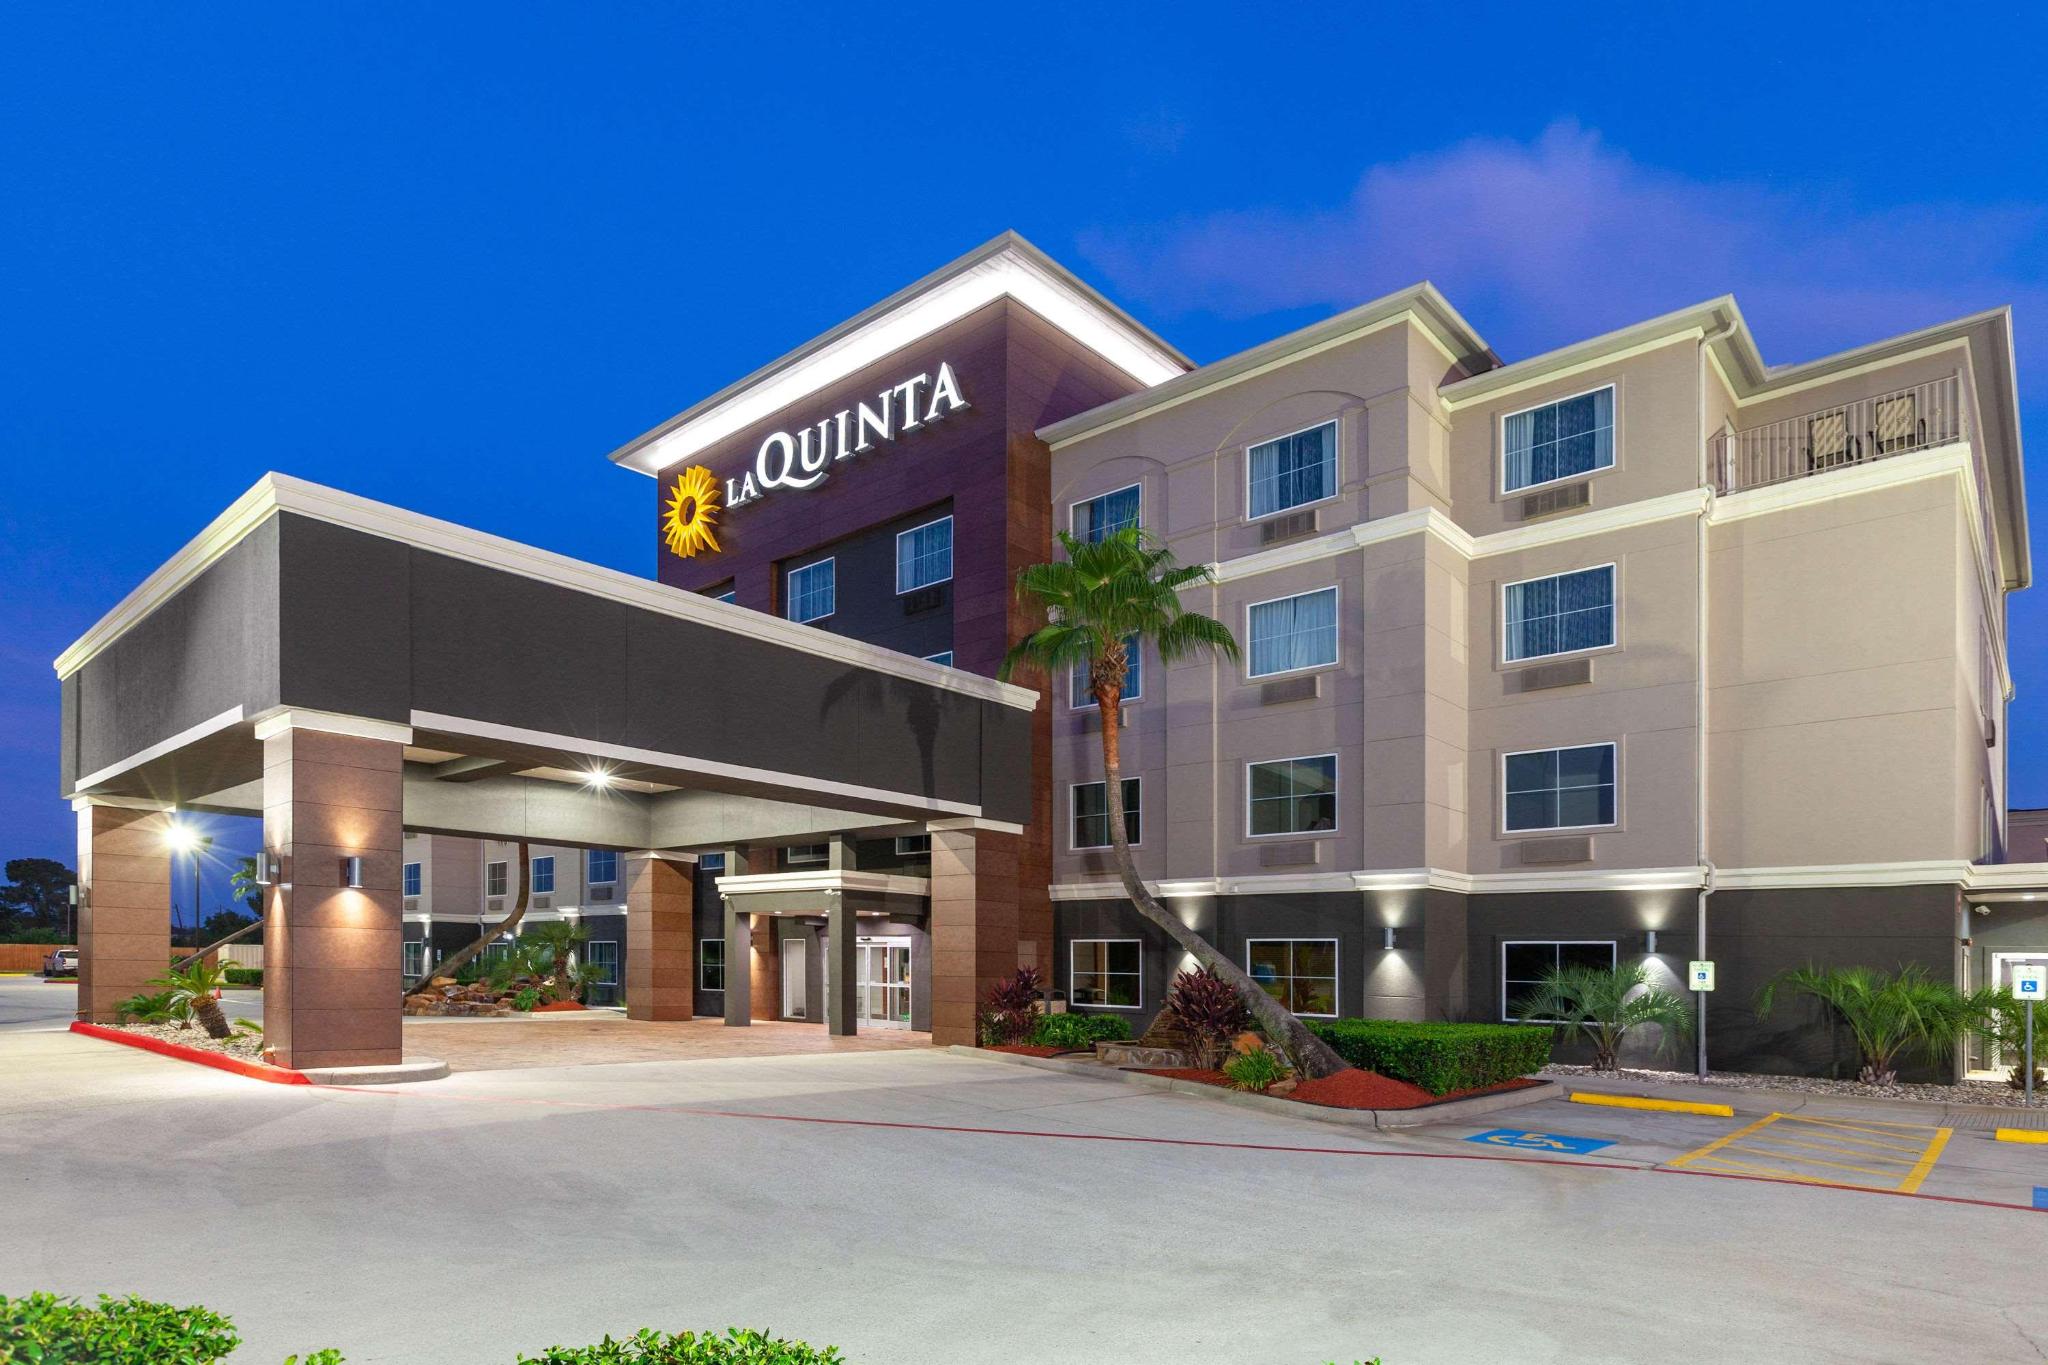 Quinta Inn Suites Houston Channelview Houston area BestDay com